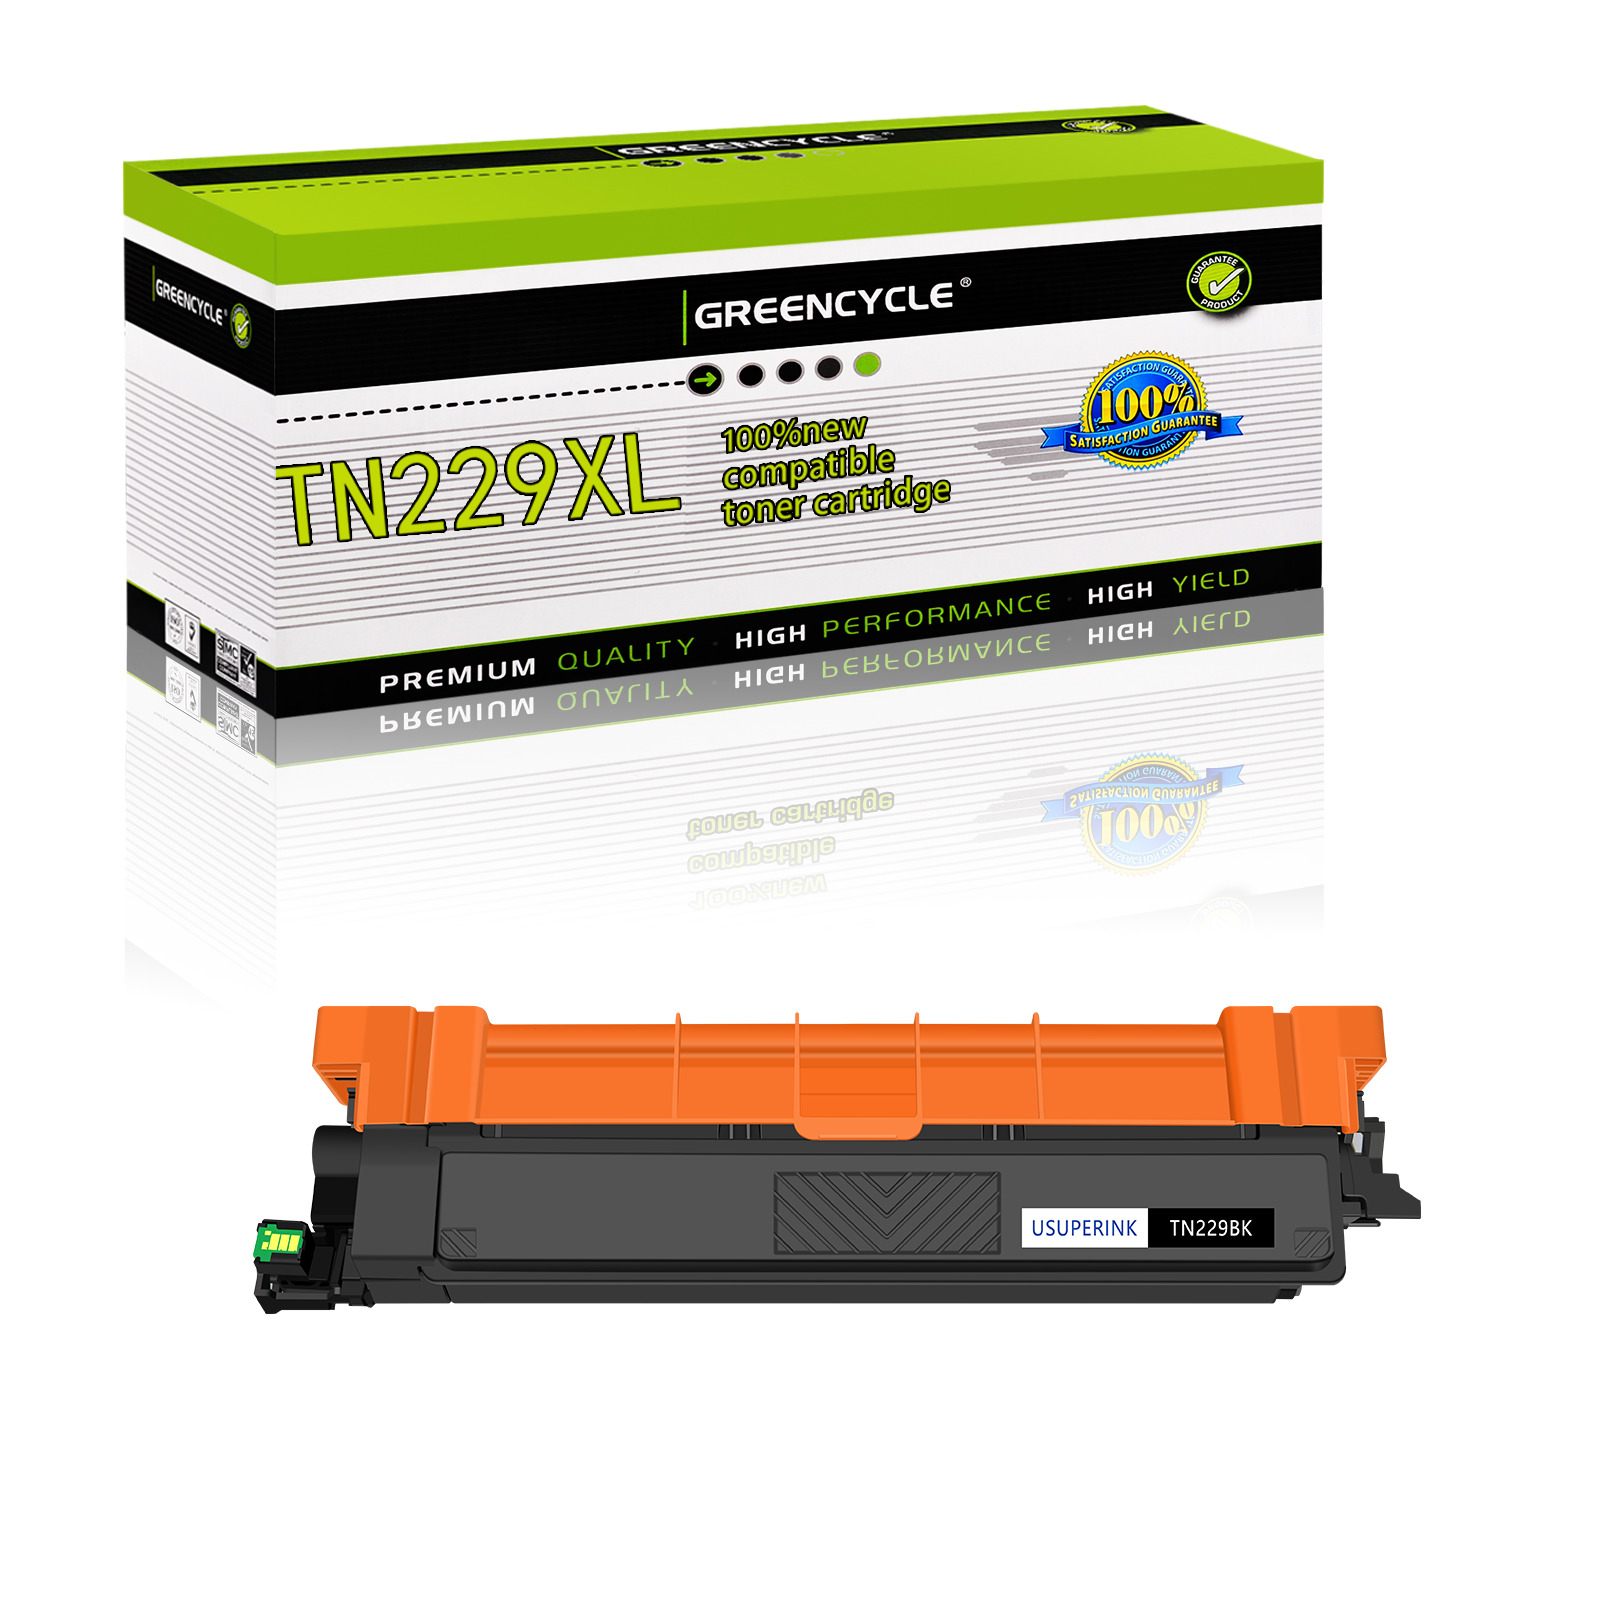 CYMB Color Toner Cartridge TN229 XL Fit For Brother HL-L3220CDW MFC-L3720CDW